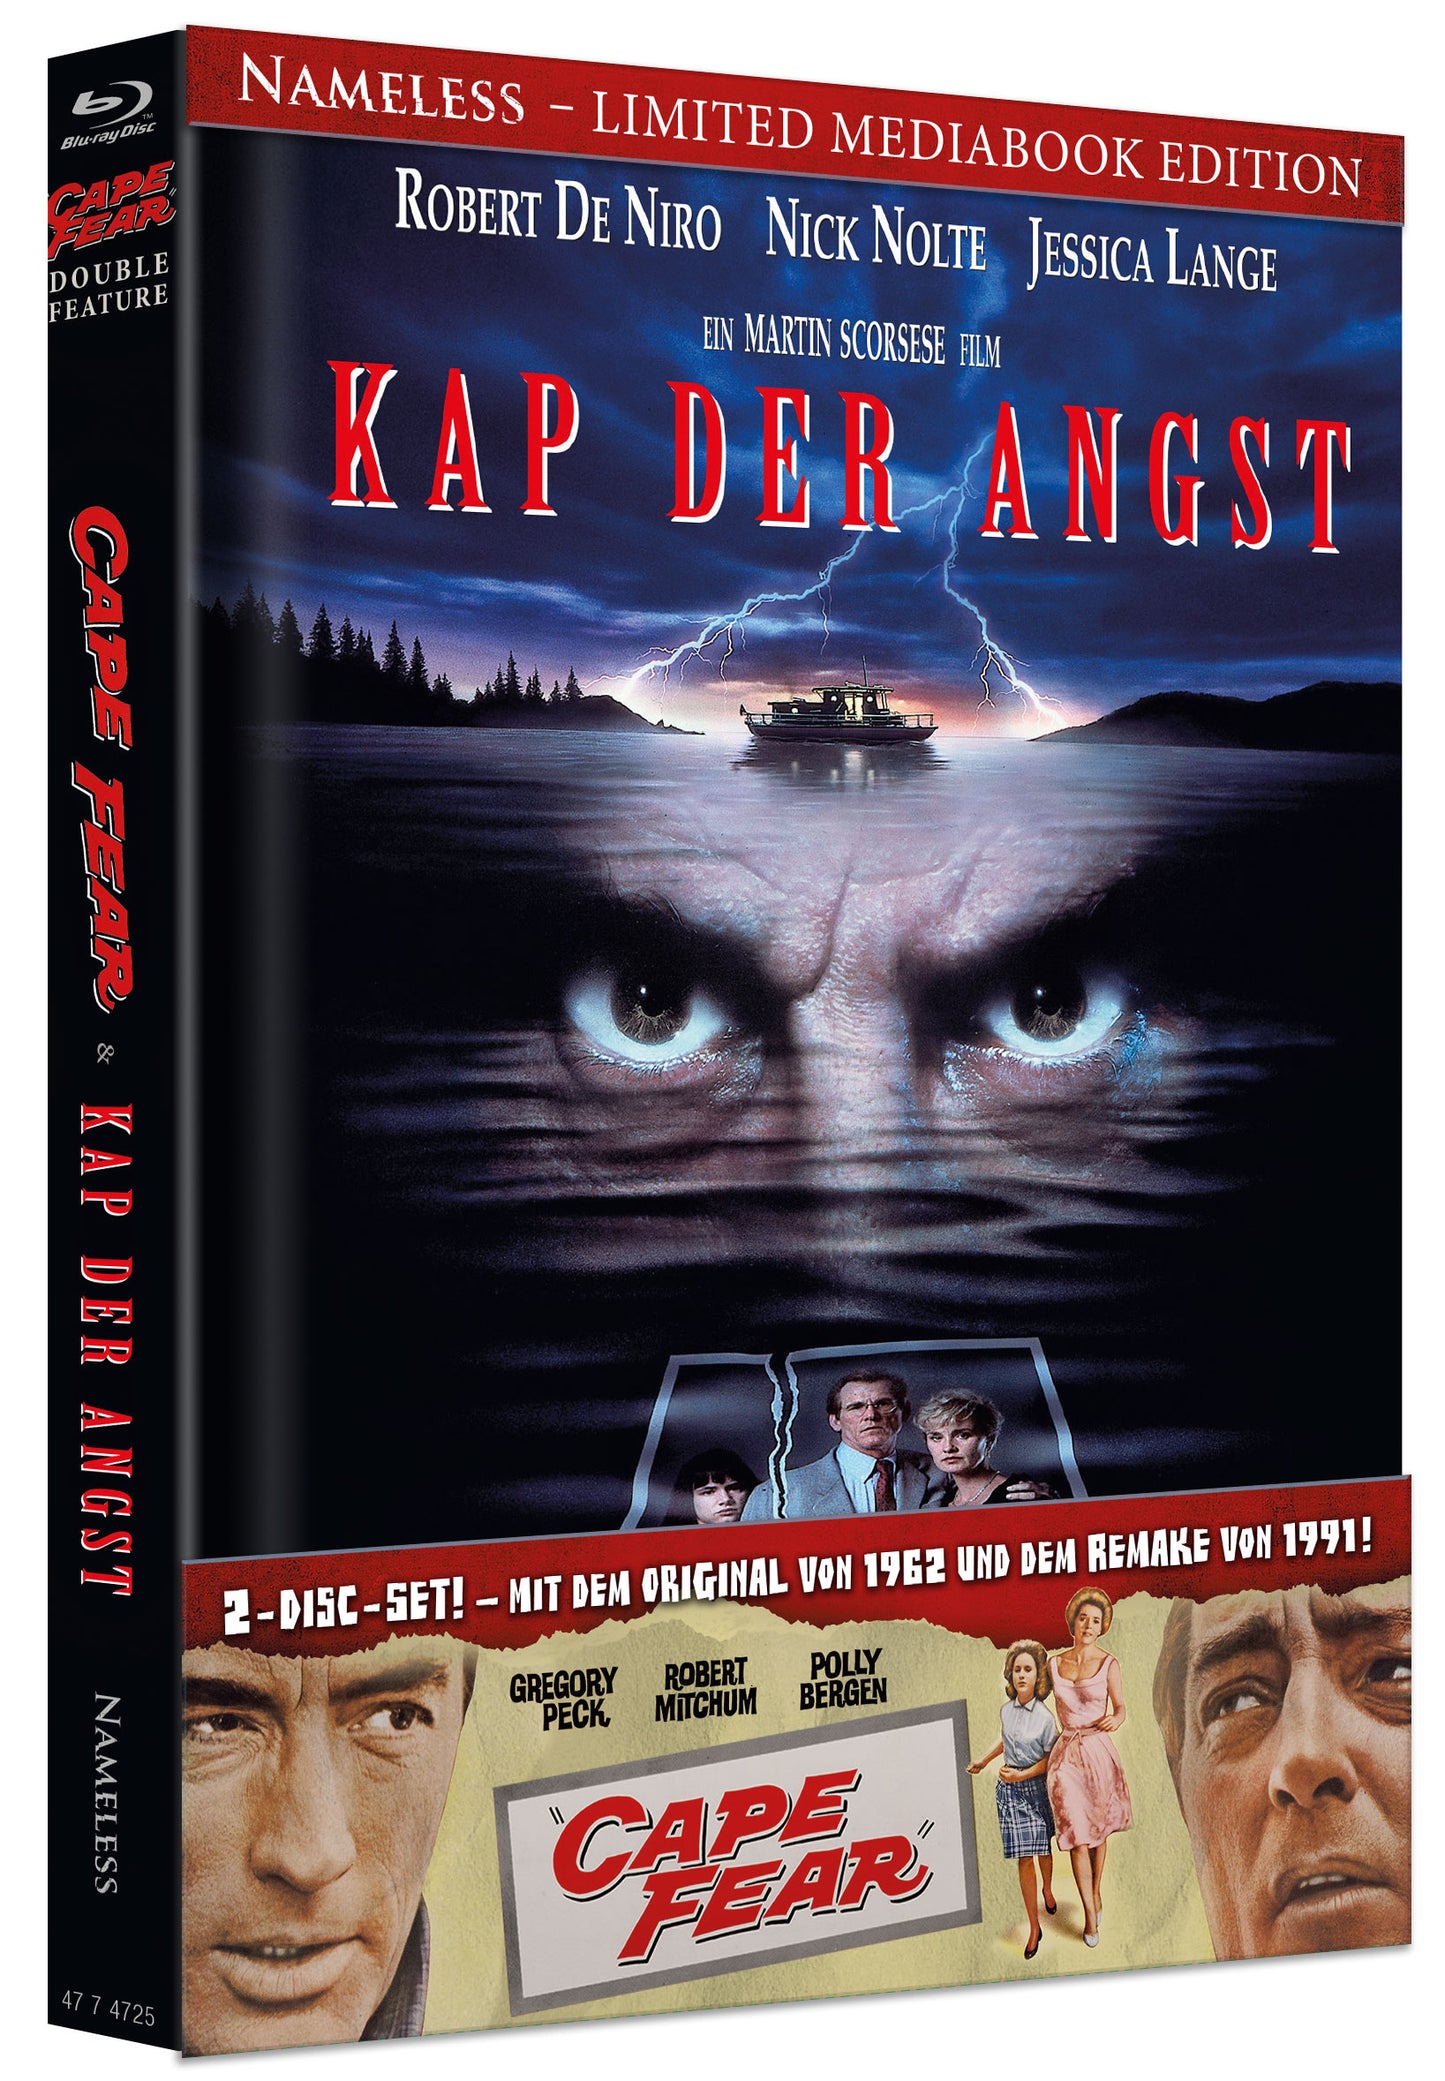 Mediabook KAP DER ANGST - CAP FEAR - DOUBLE FEATURE 2 FILME/Original und Remake Cover A - USA 1991/1962